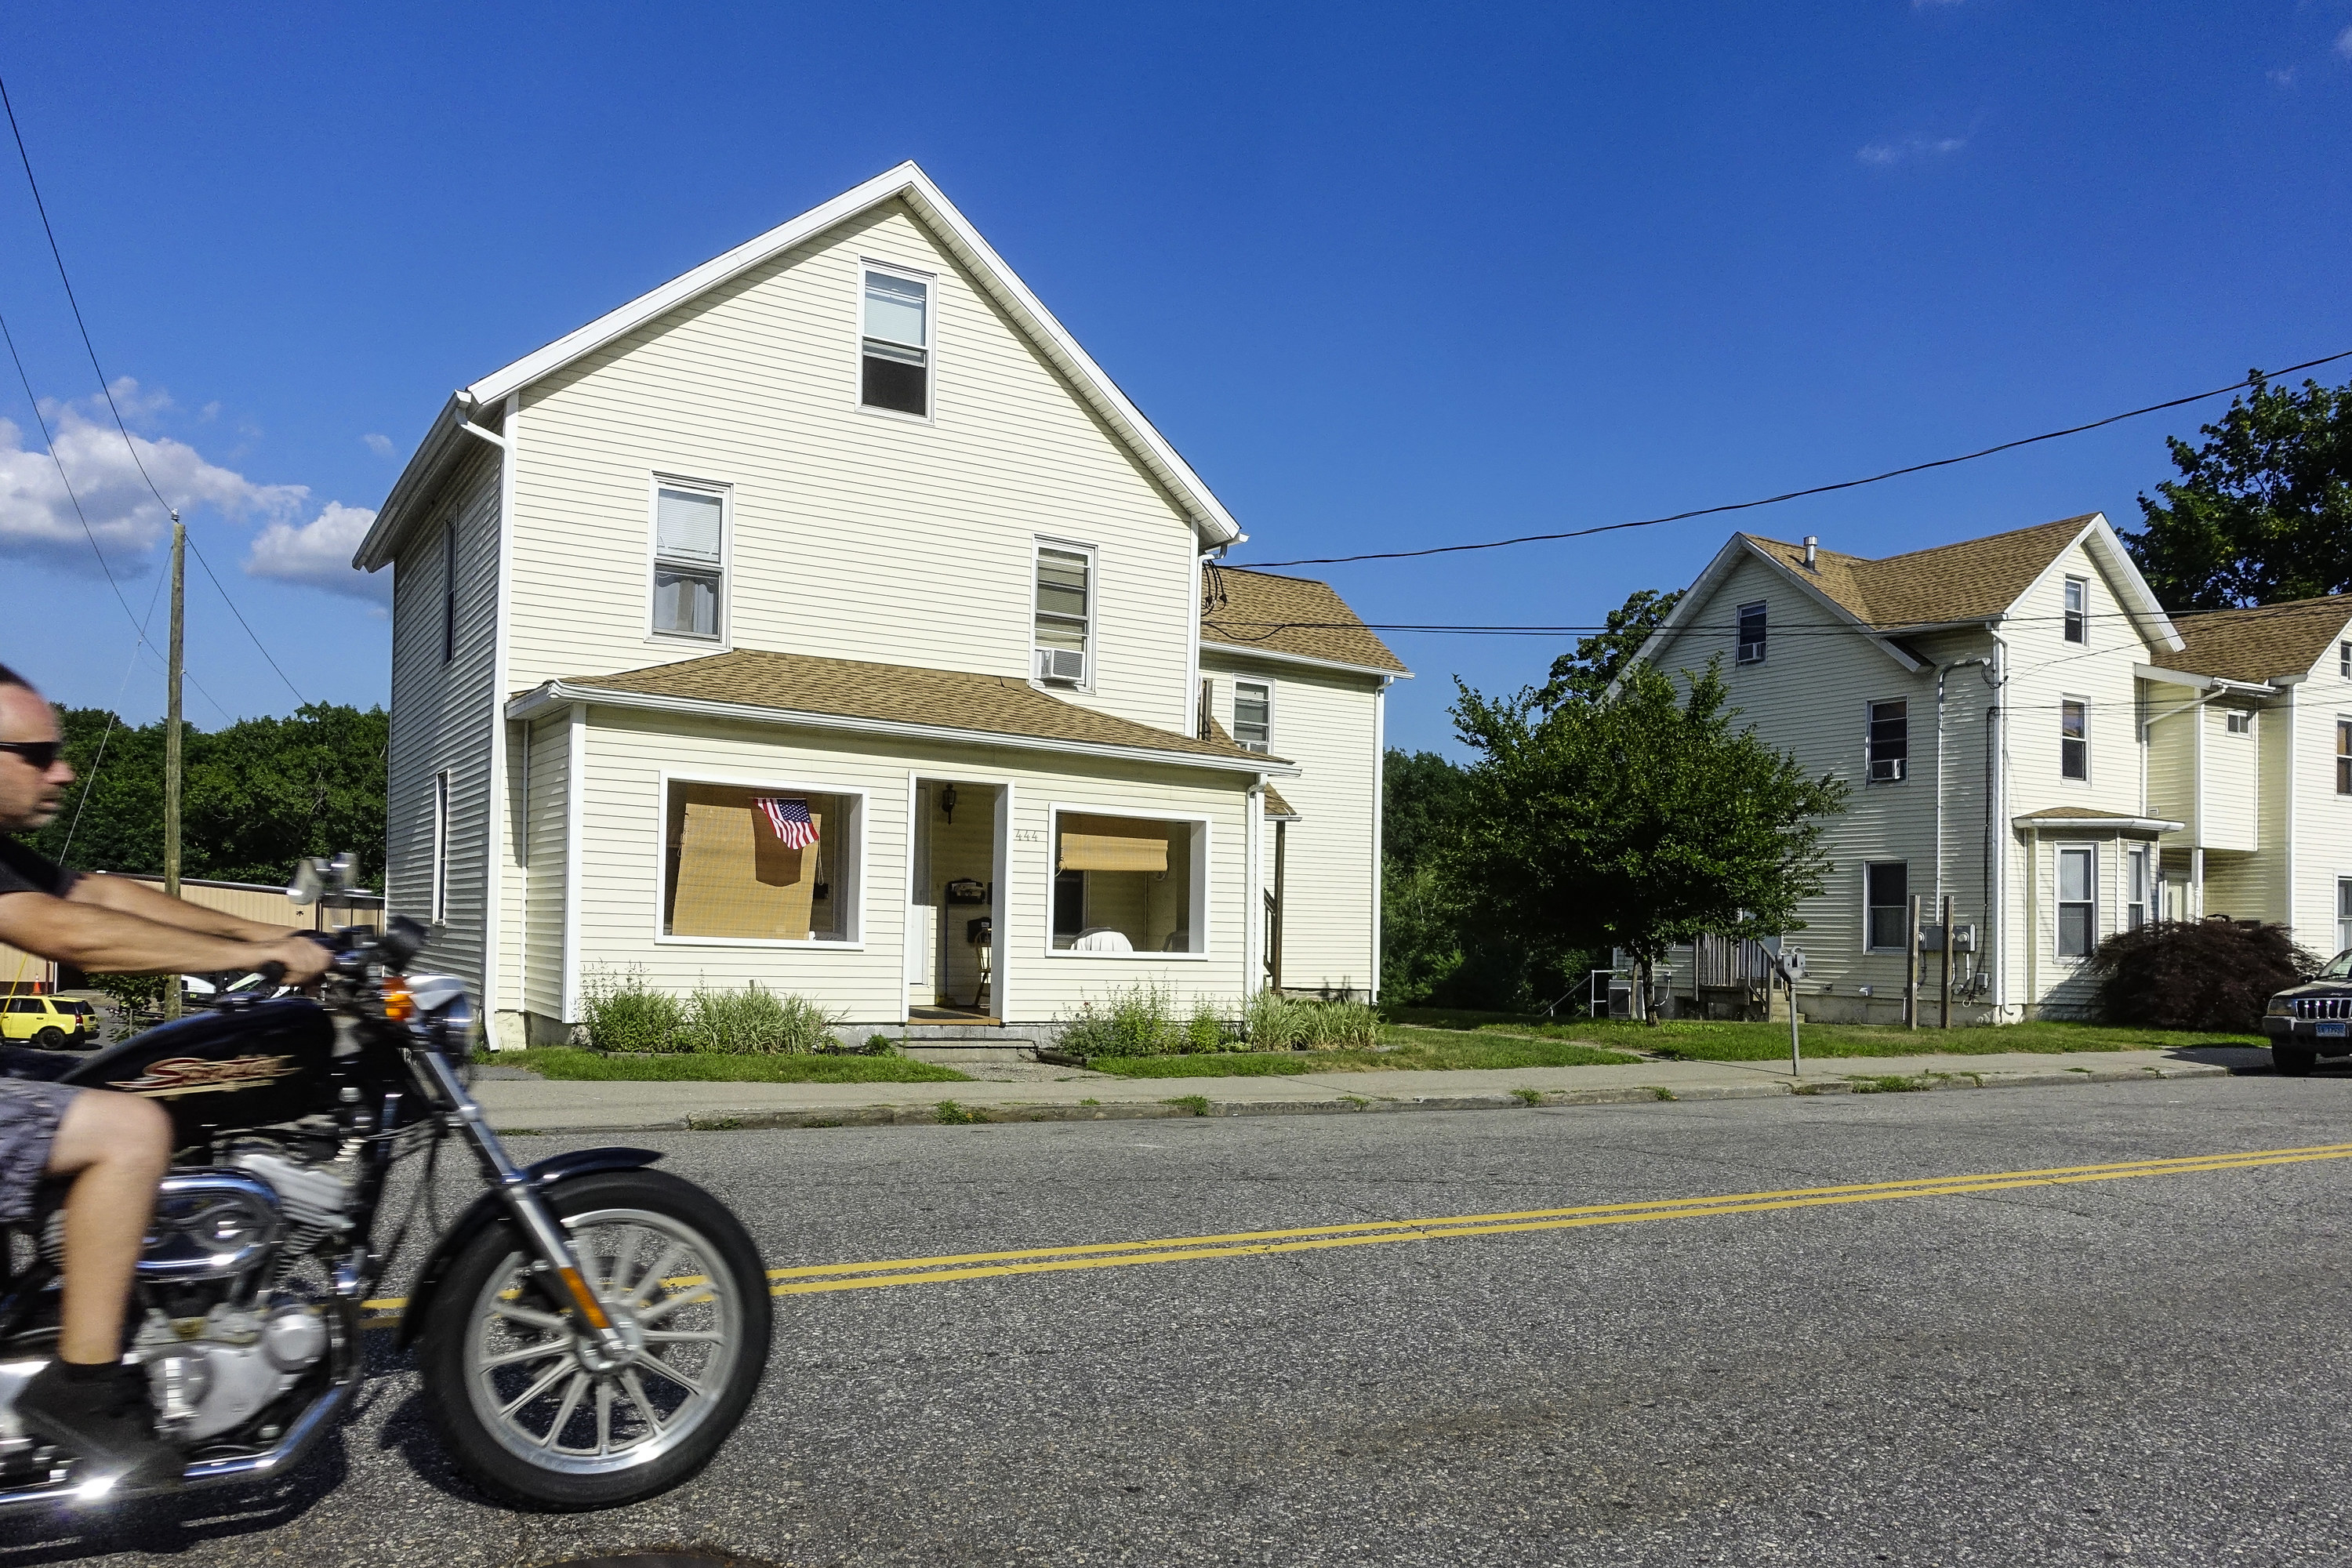 Torrington, Wyoming motorcyclist riding down a residential block